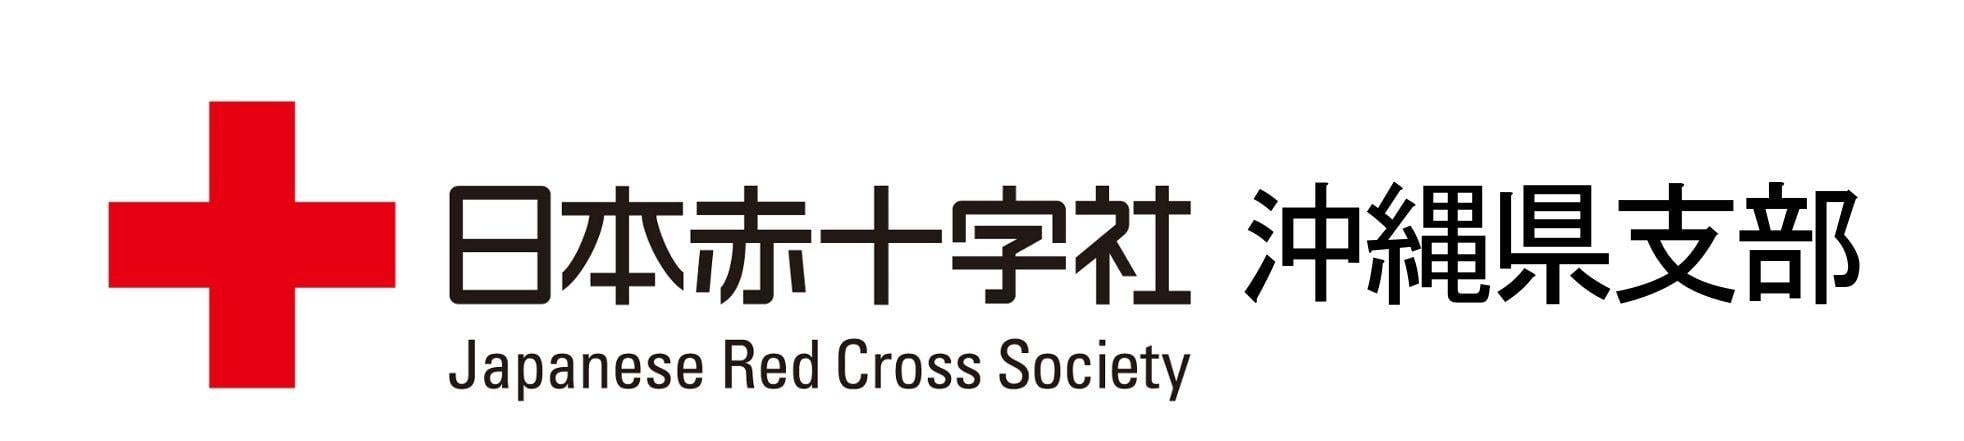 Red Cross Society Logo - File:Japanese Red Cross Society logo - 1.jpg - Wikimedia Commons